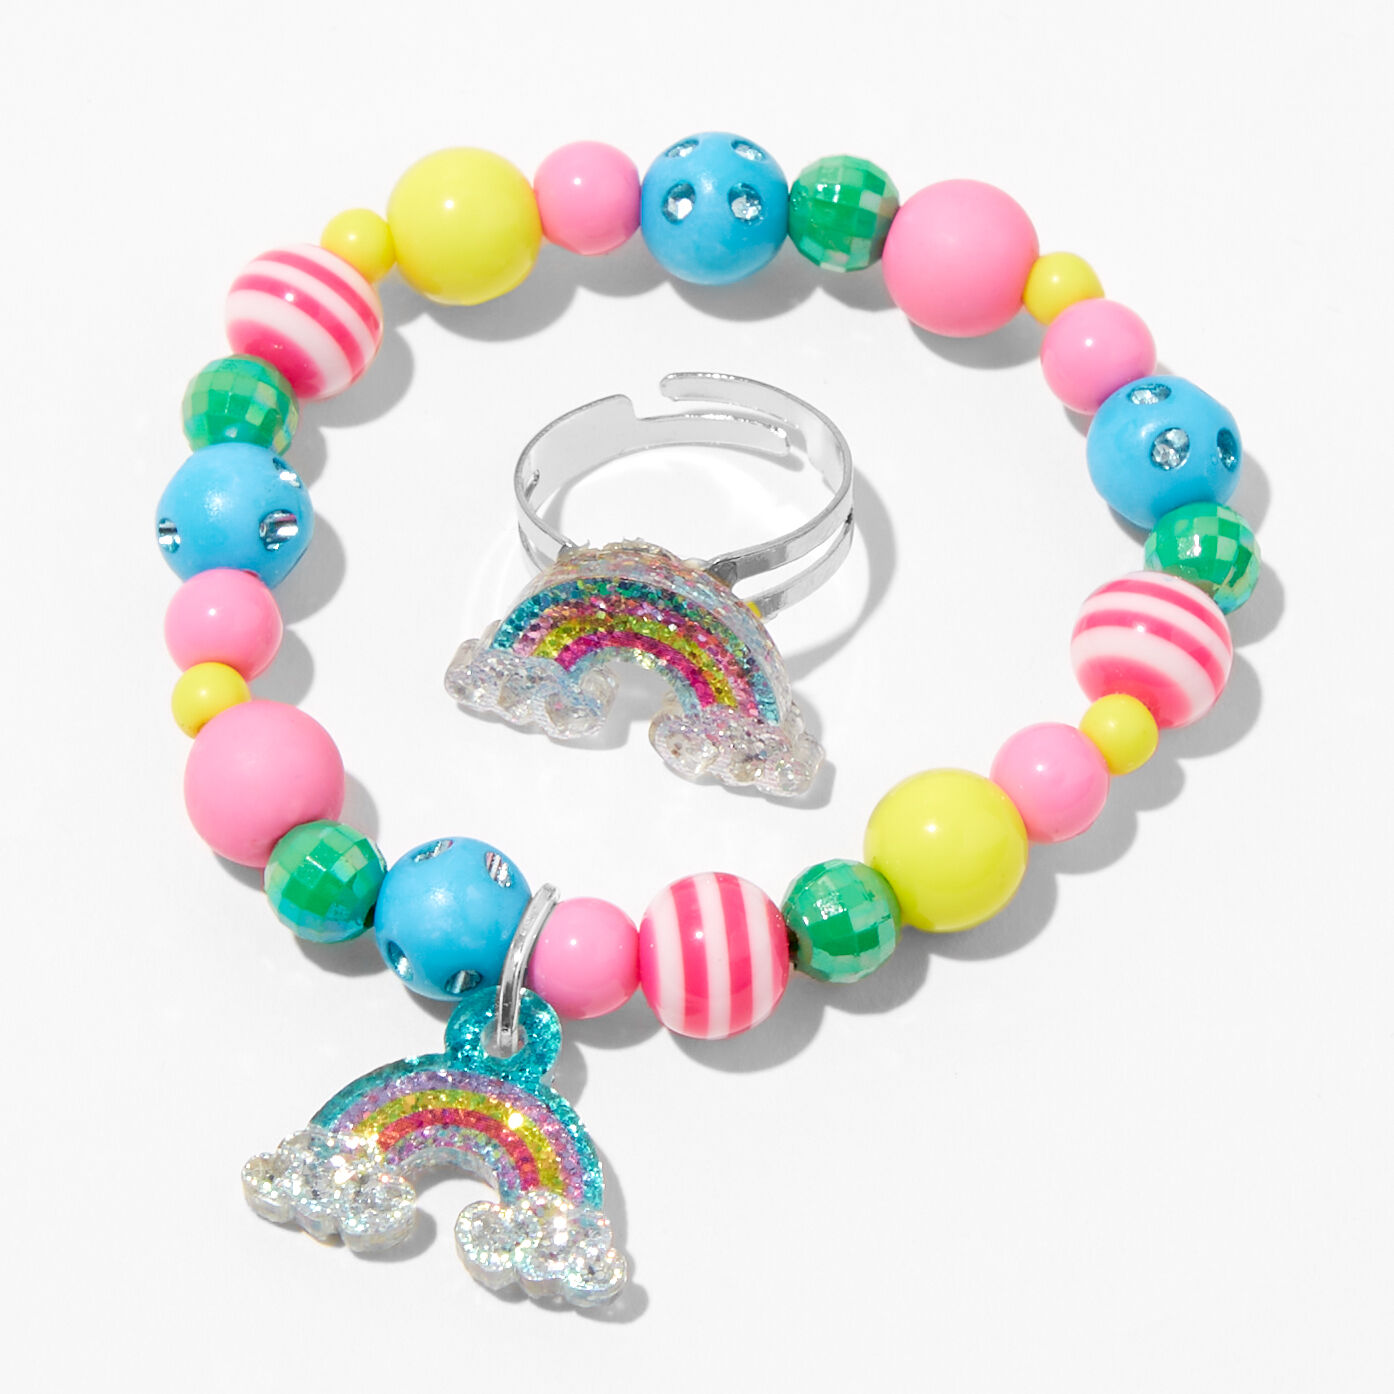 Details about   Claire’s Best Friend Beaded Bracelet Jewelry Set Daisy Rainbow Lot 